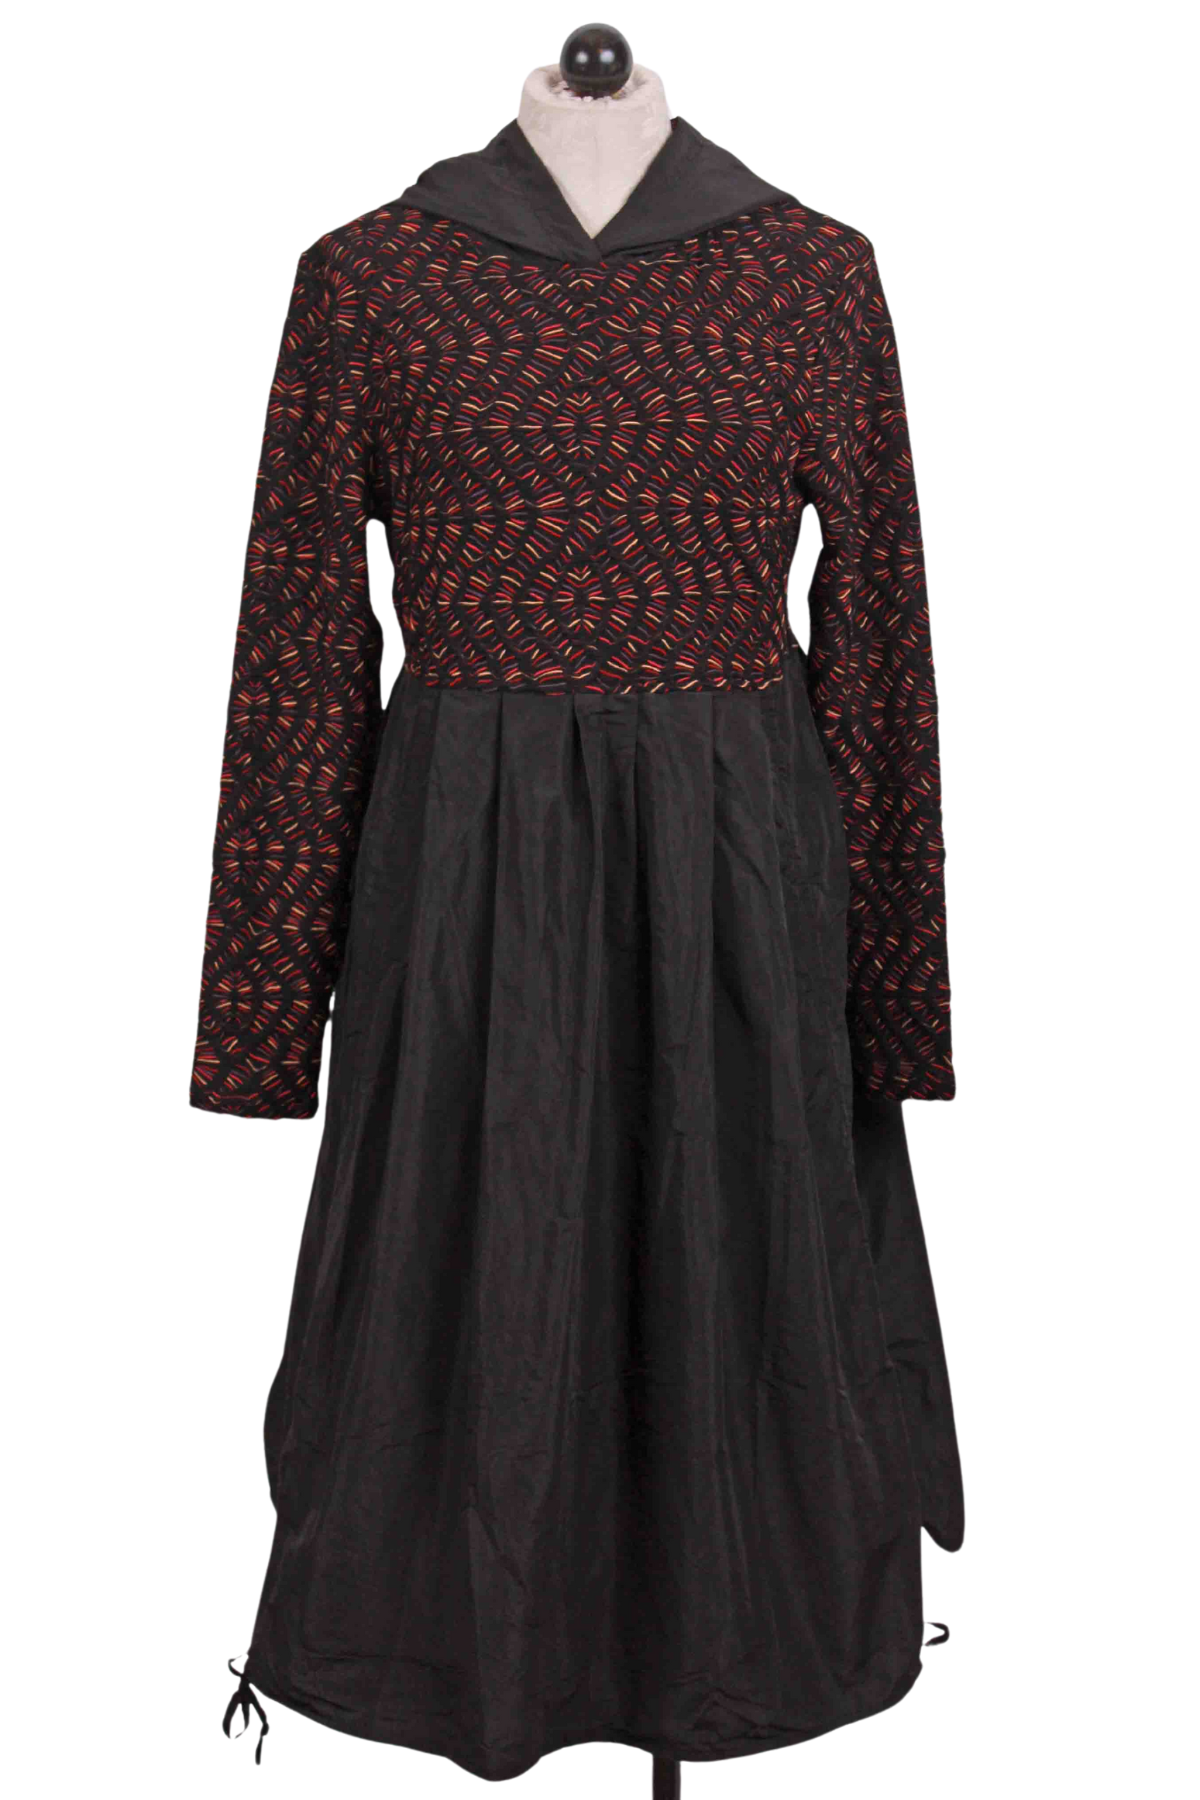 Long sleeve swirly knit top Hooded Teagan Dress by Kozan